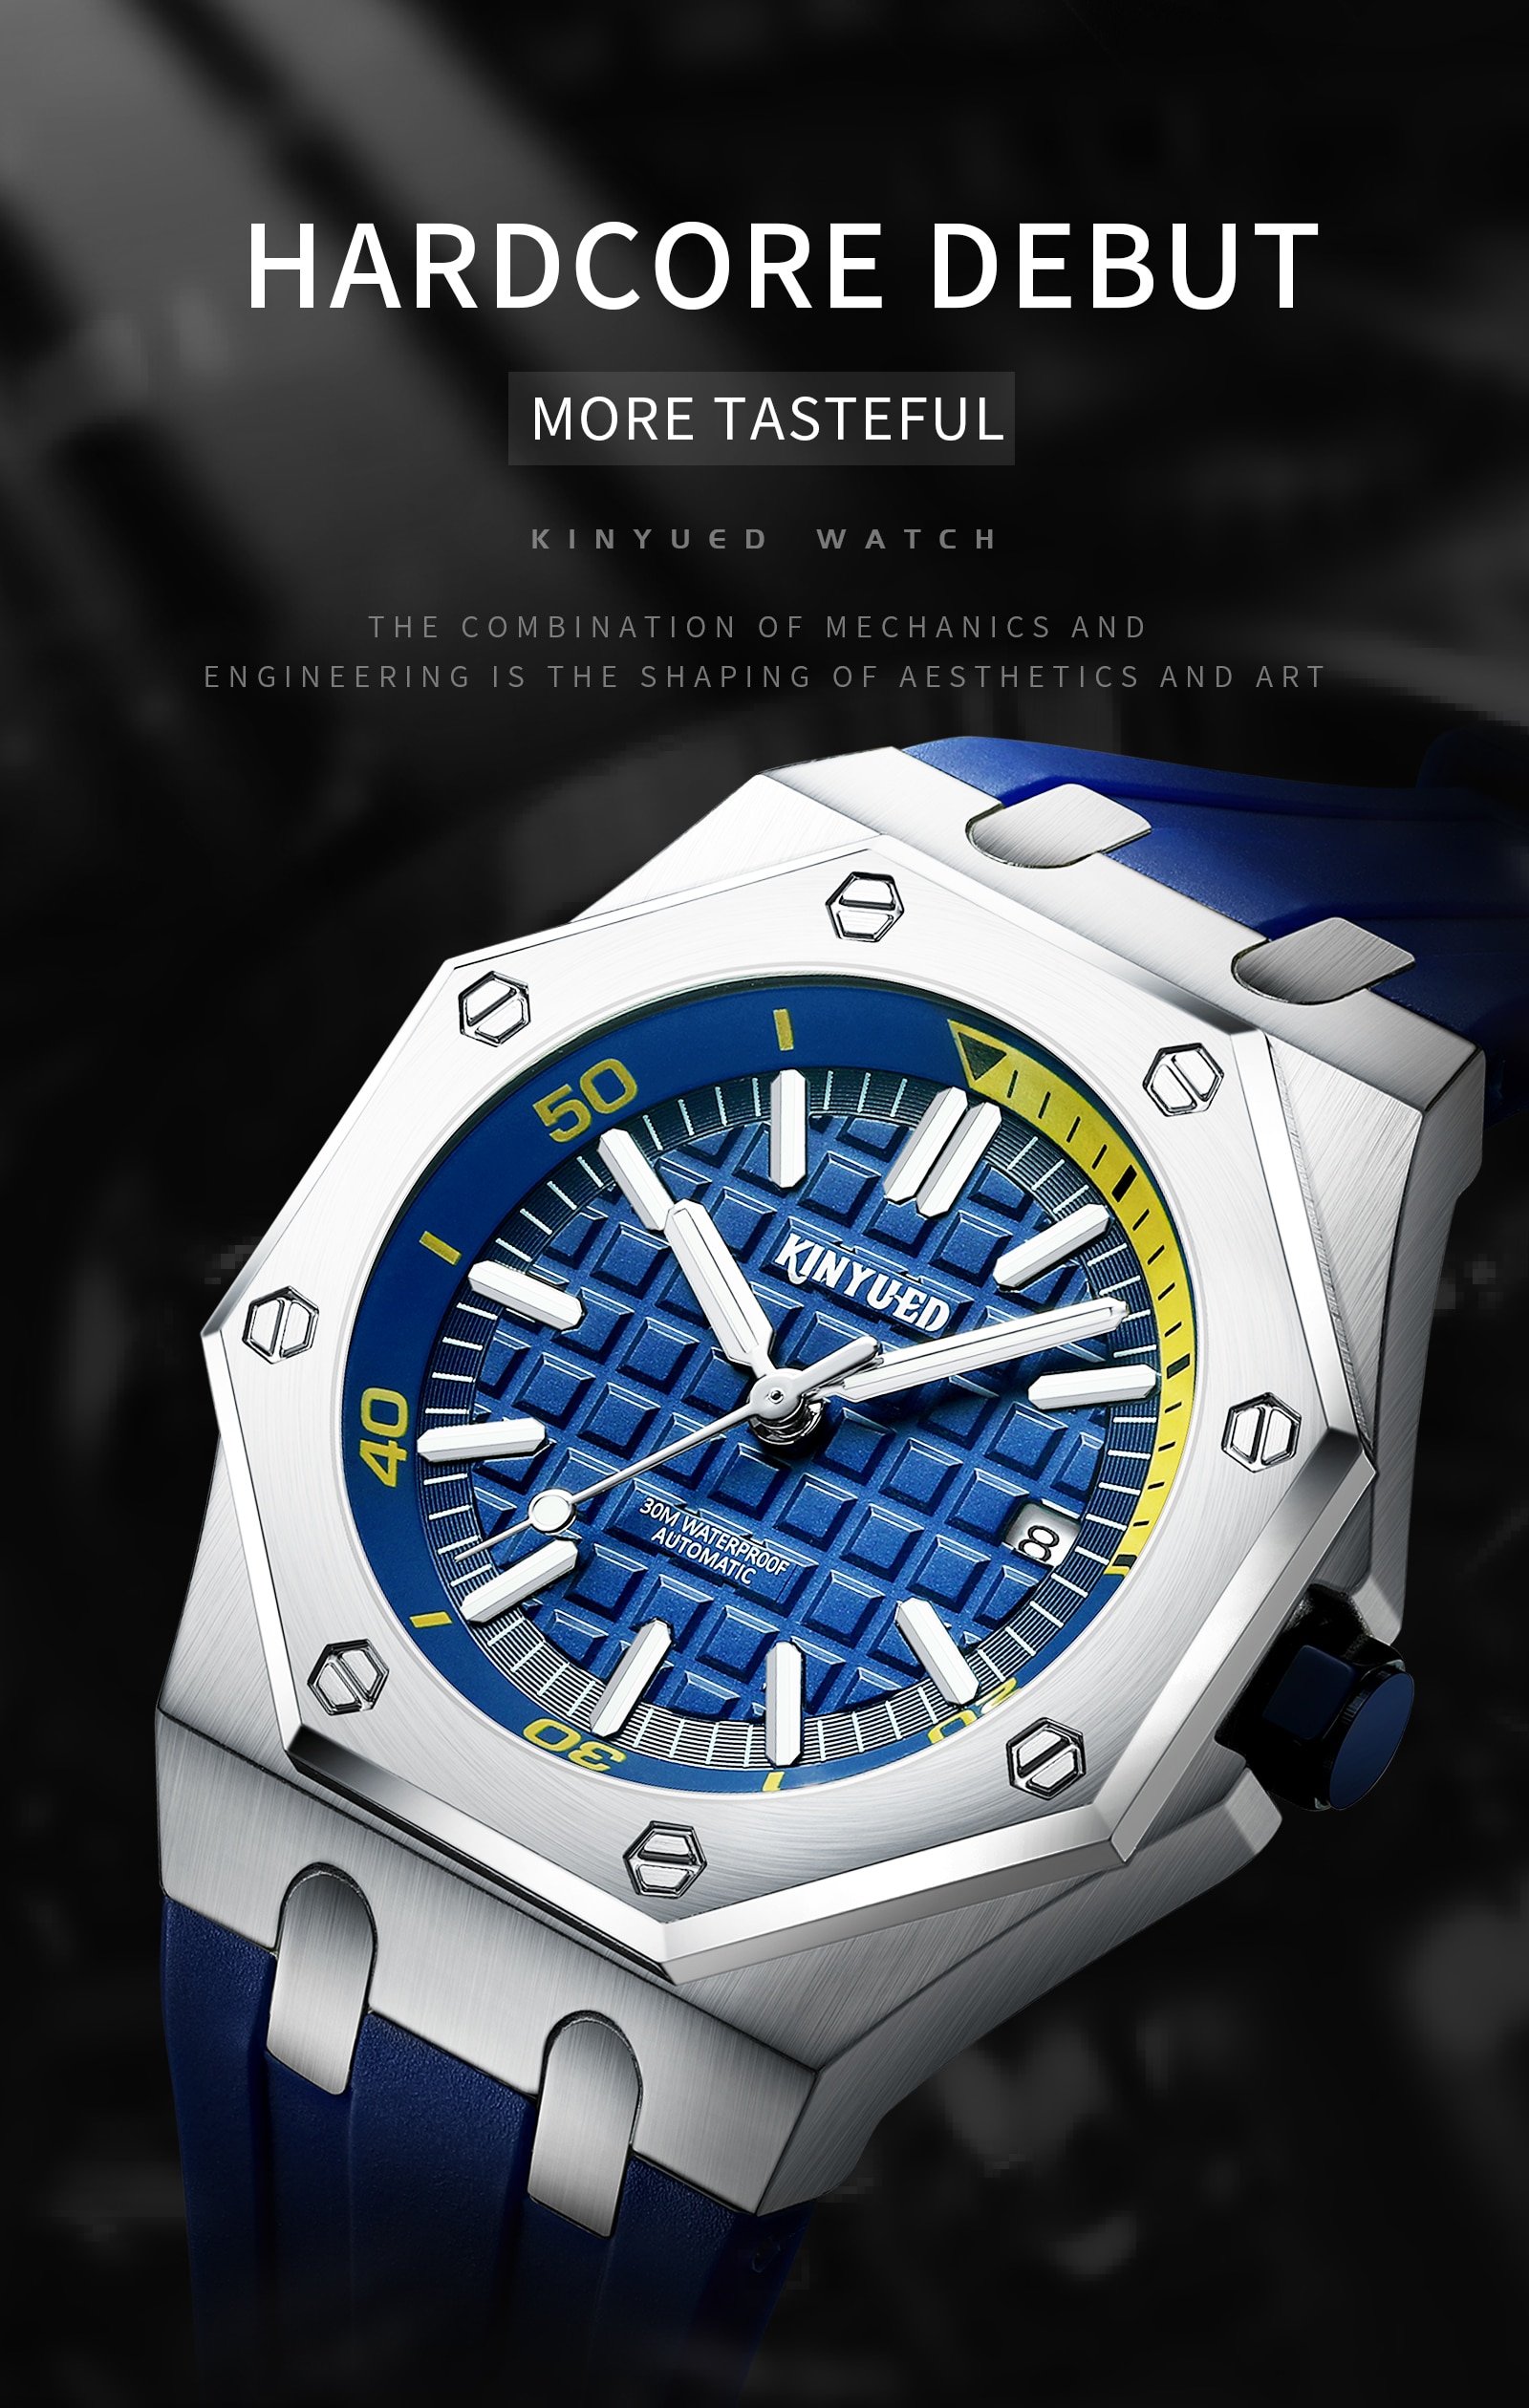 New Men's Watch Top Luxury Brand Automatic Mechanical Watch Men's Fashion Silicone Strap Waterproof Watch Date